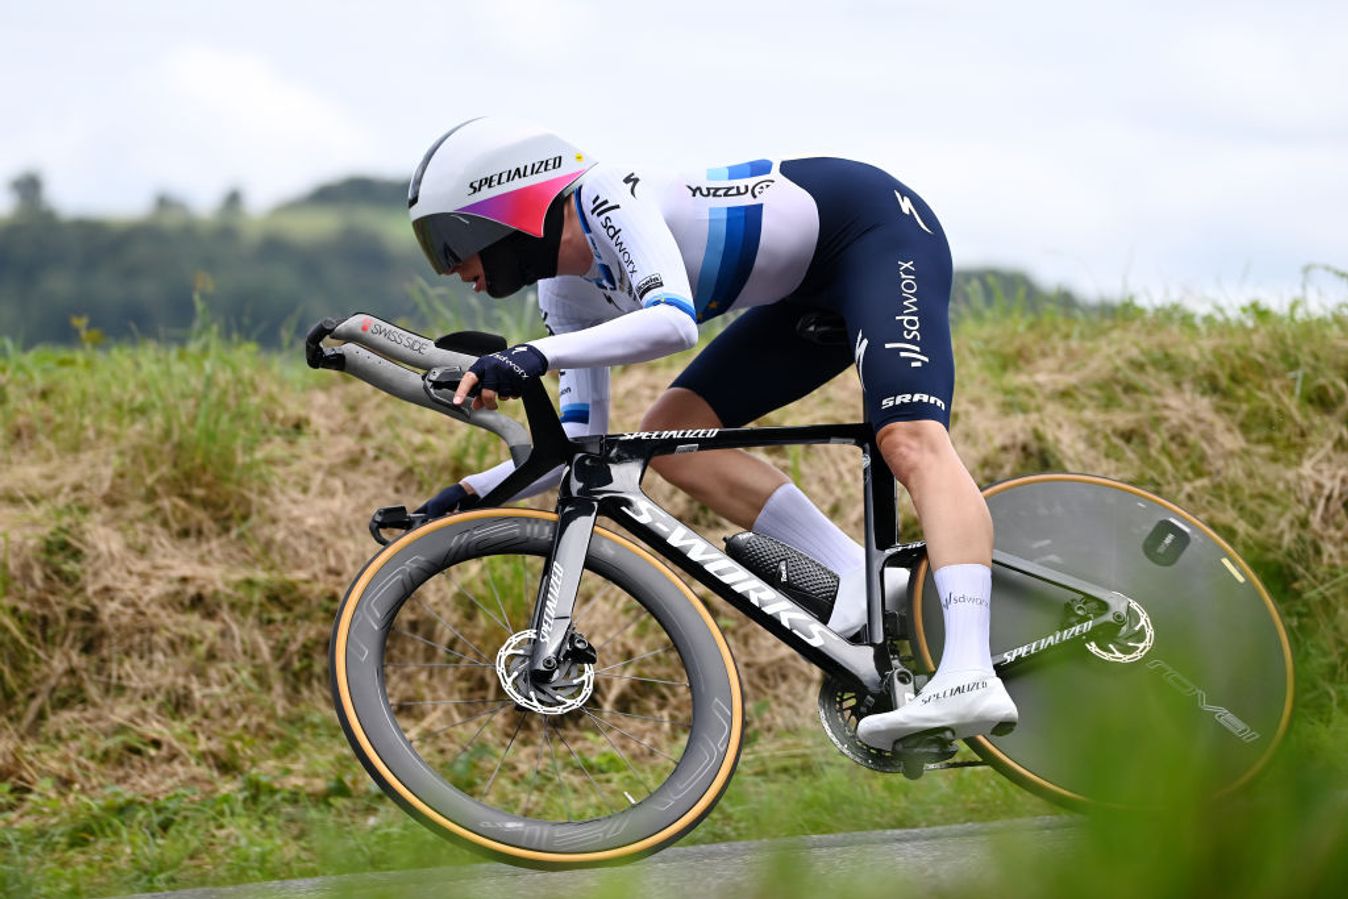 Marlen Reusser en route to victory in the Tour de France Femmes time trial